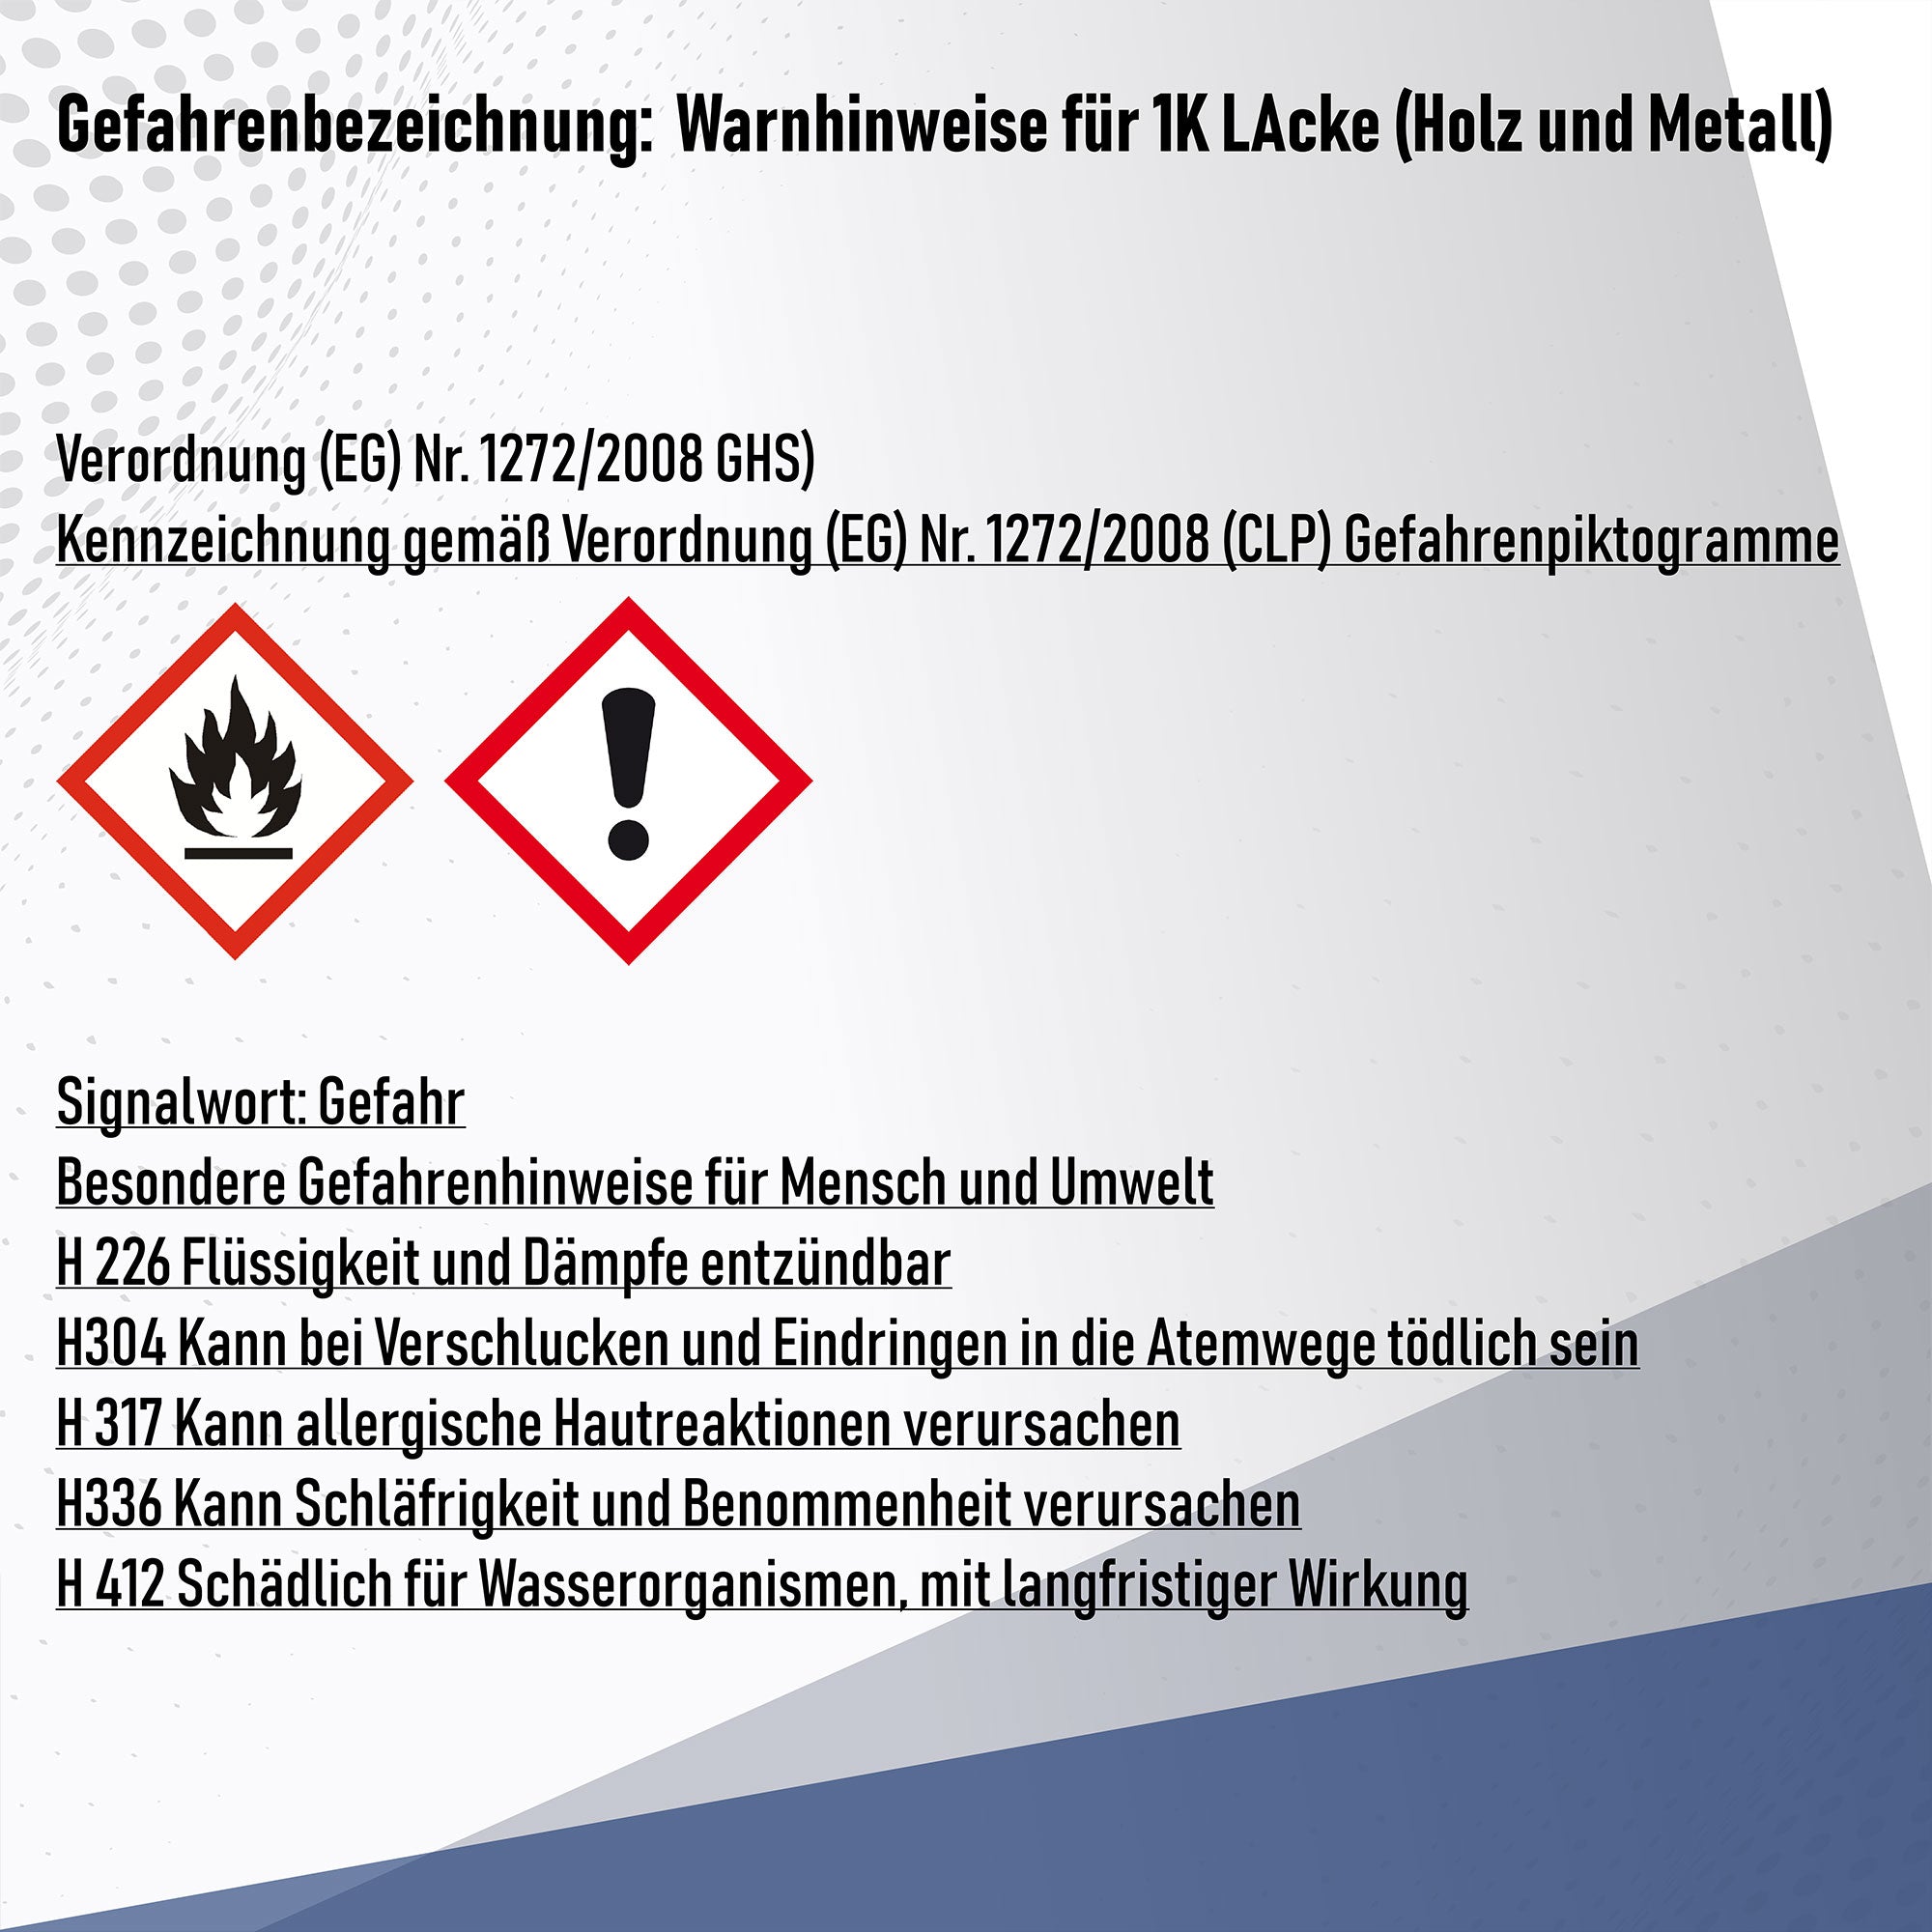 Hamburger Lack-Profi Buntlack in Oxidrot RAL 3009 mit Lackierset (X300) & Verdünnung (1 L) - 30% Sparangebot